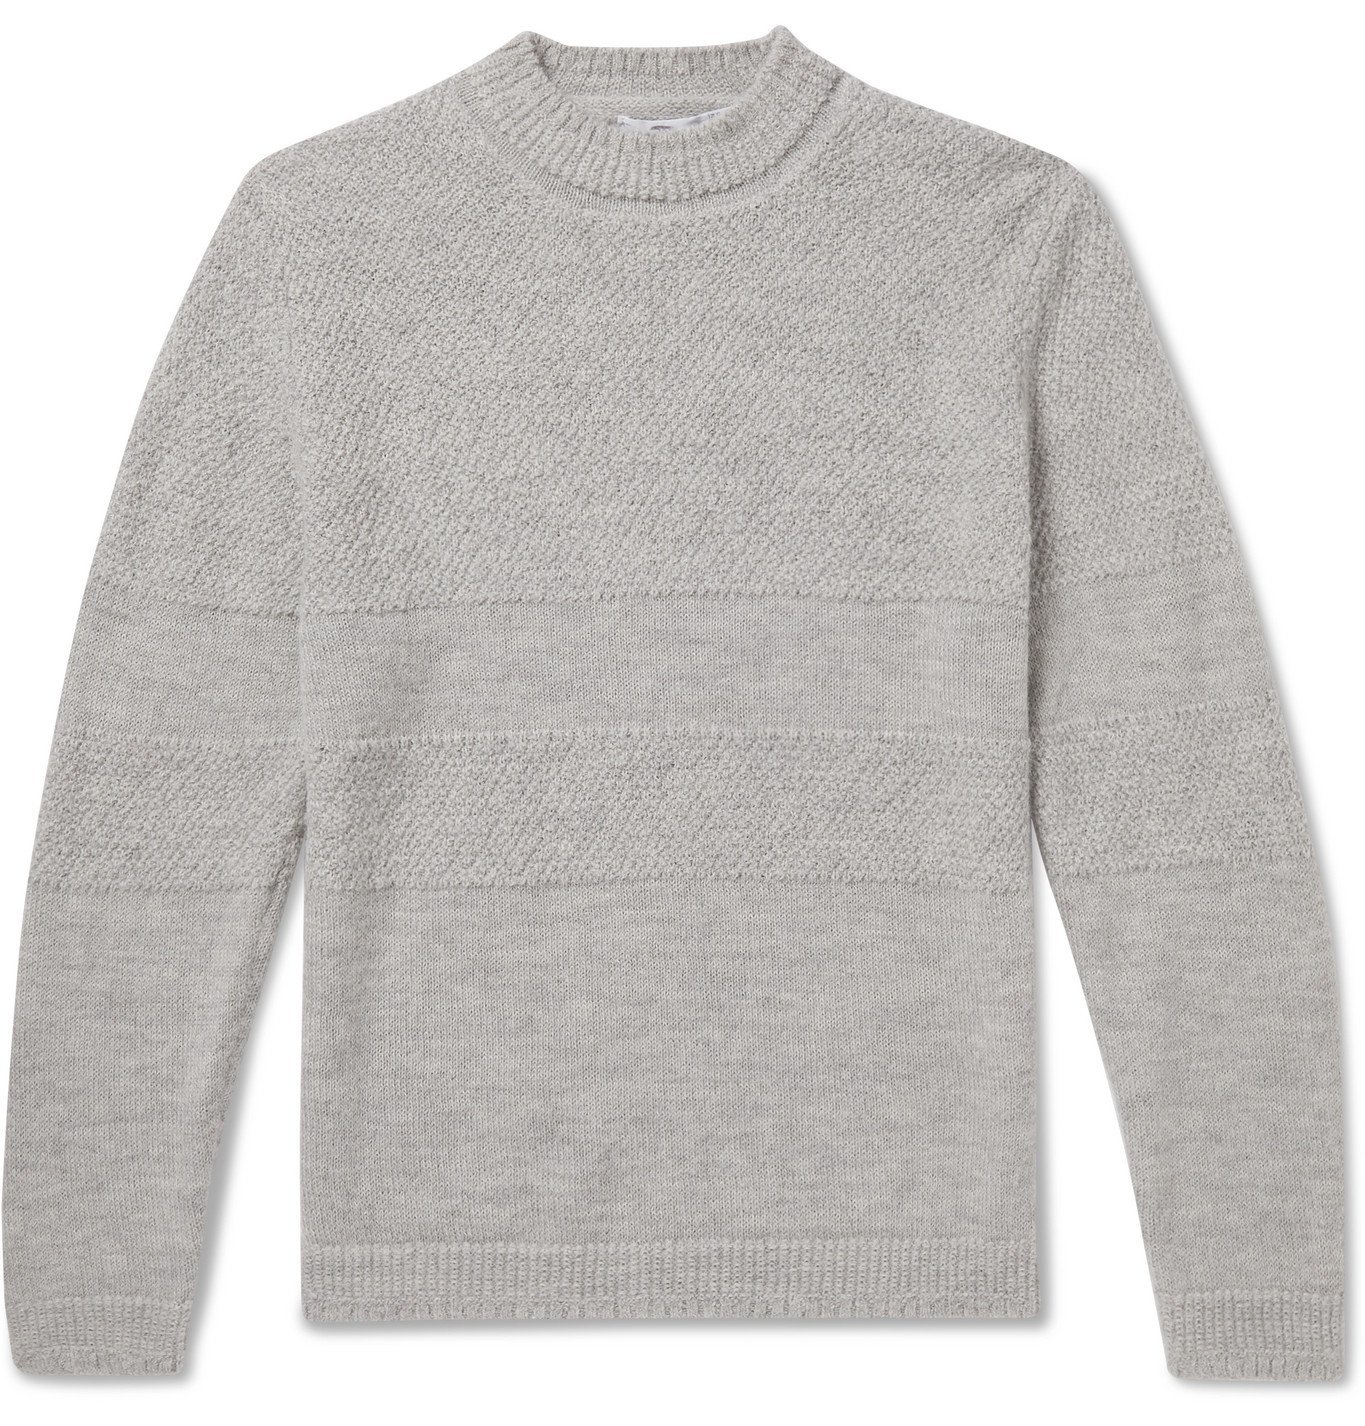 Inis Meáin - Mélange Textured Baby Alpaca Sweater - Gray Inis Meáin